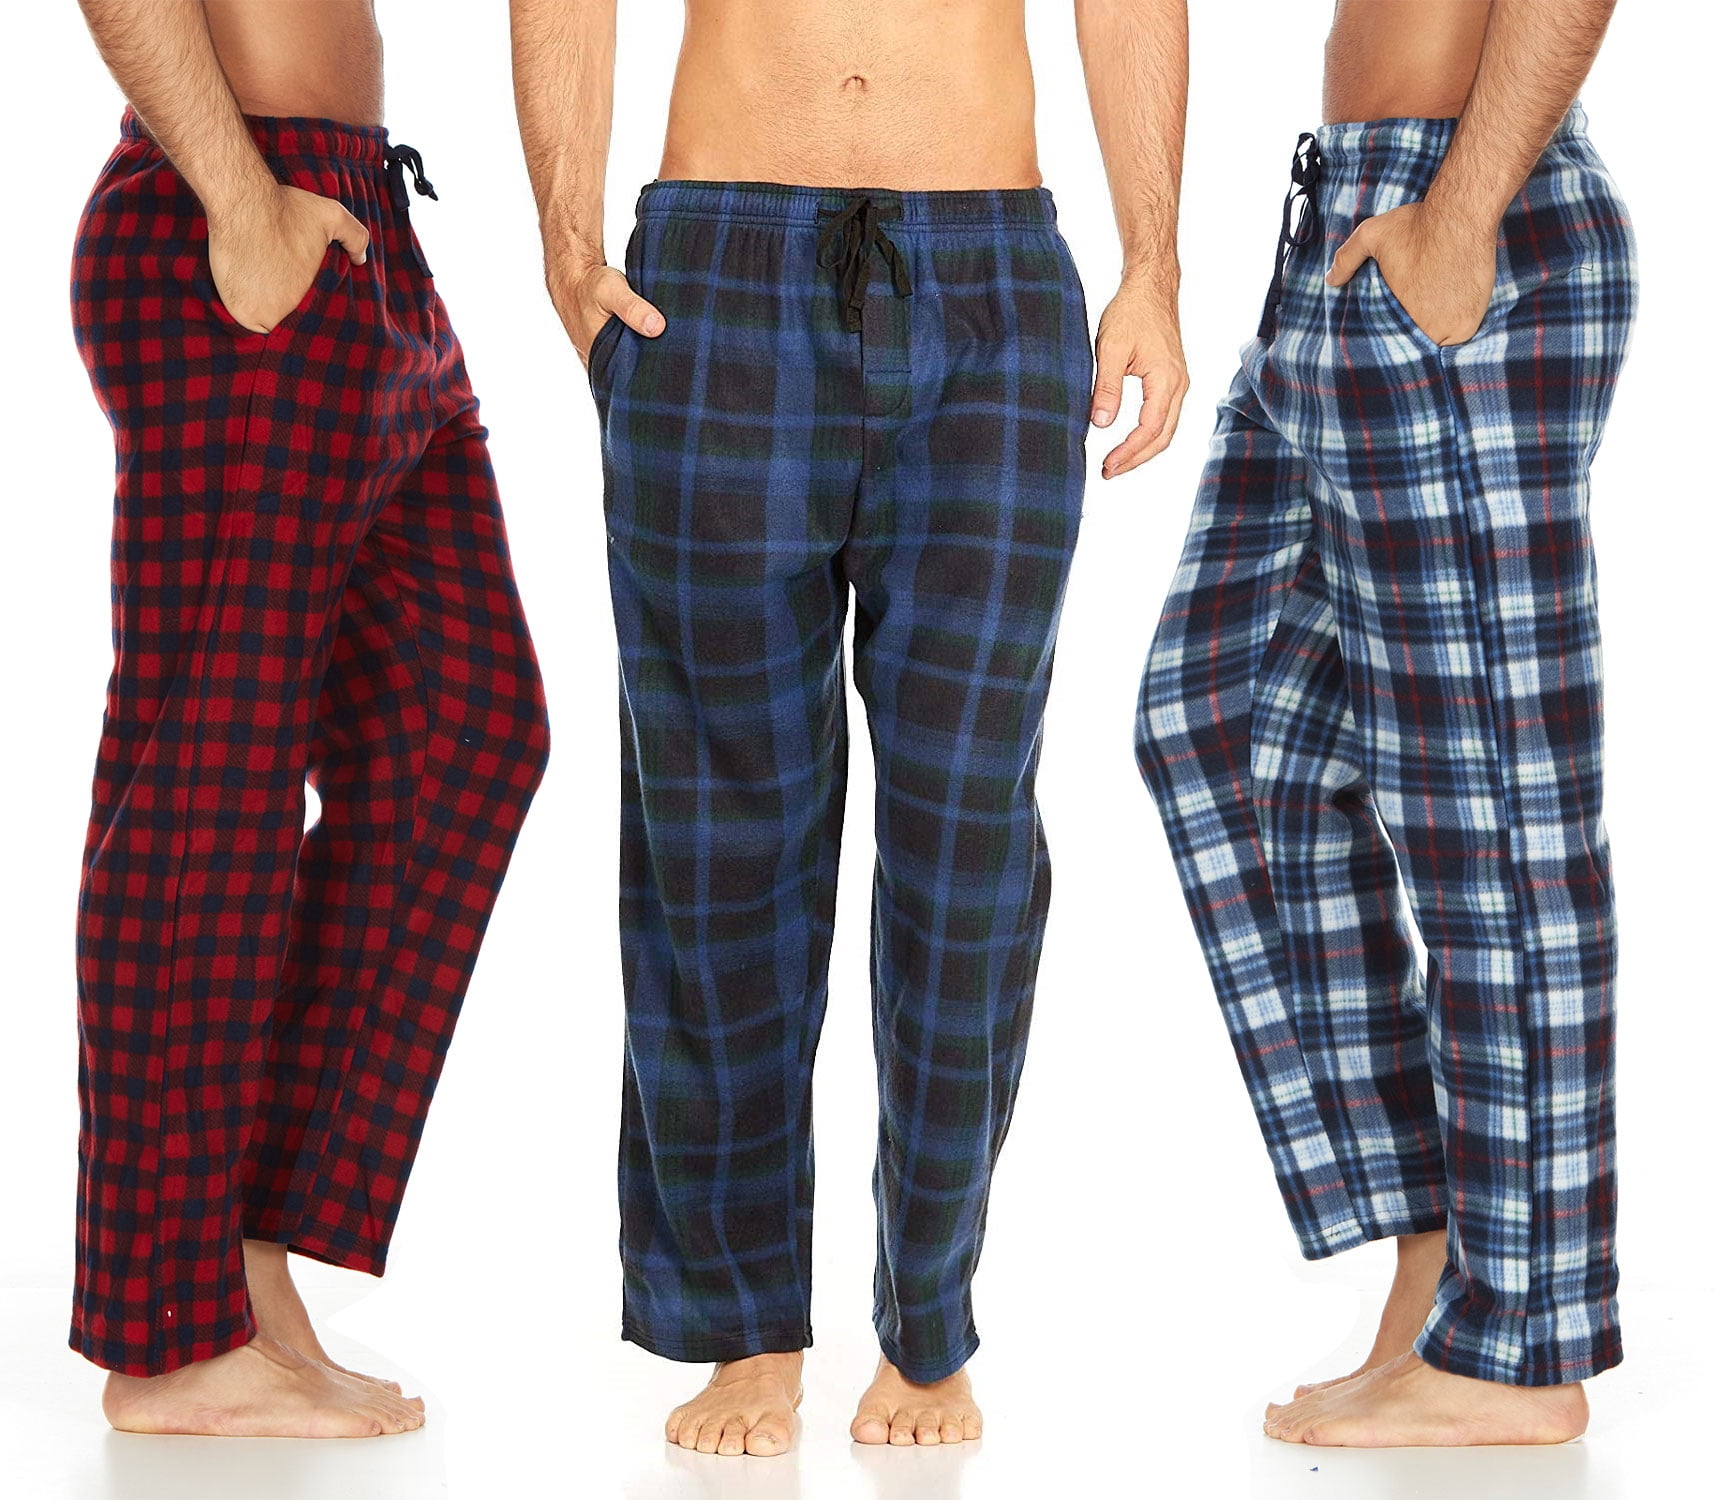 Daresay - DARESAY Men's Microfleece Pajama Pants/Lounge Wear Pockets, 3 ...